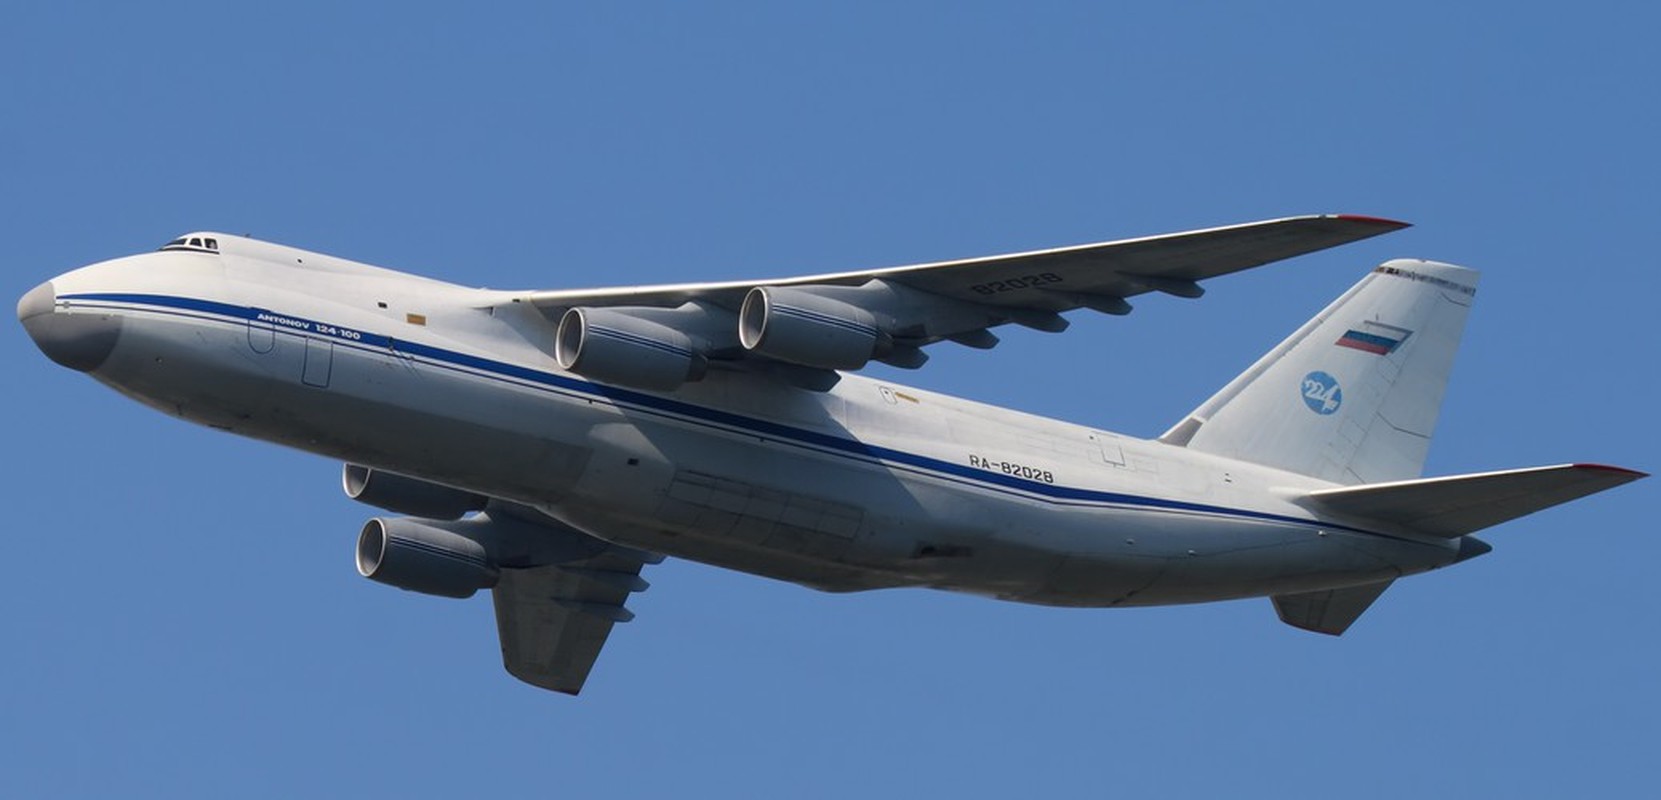 Nga kho khan khi nang cap may bay An-124 do cang thang voi Ukraine-Hinh-7